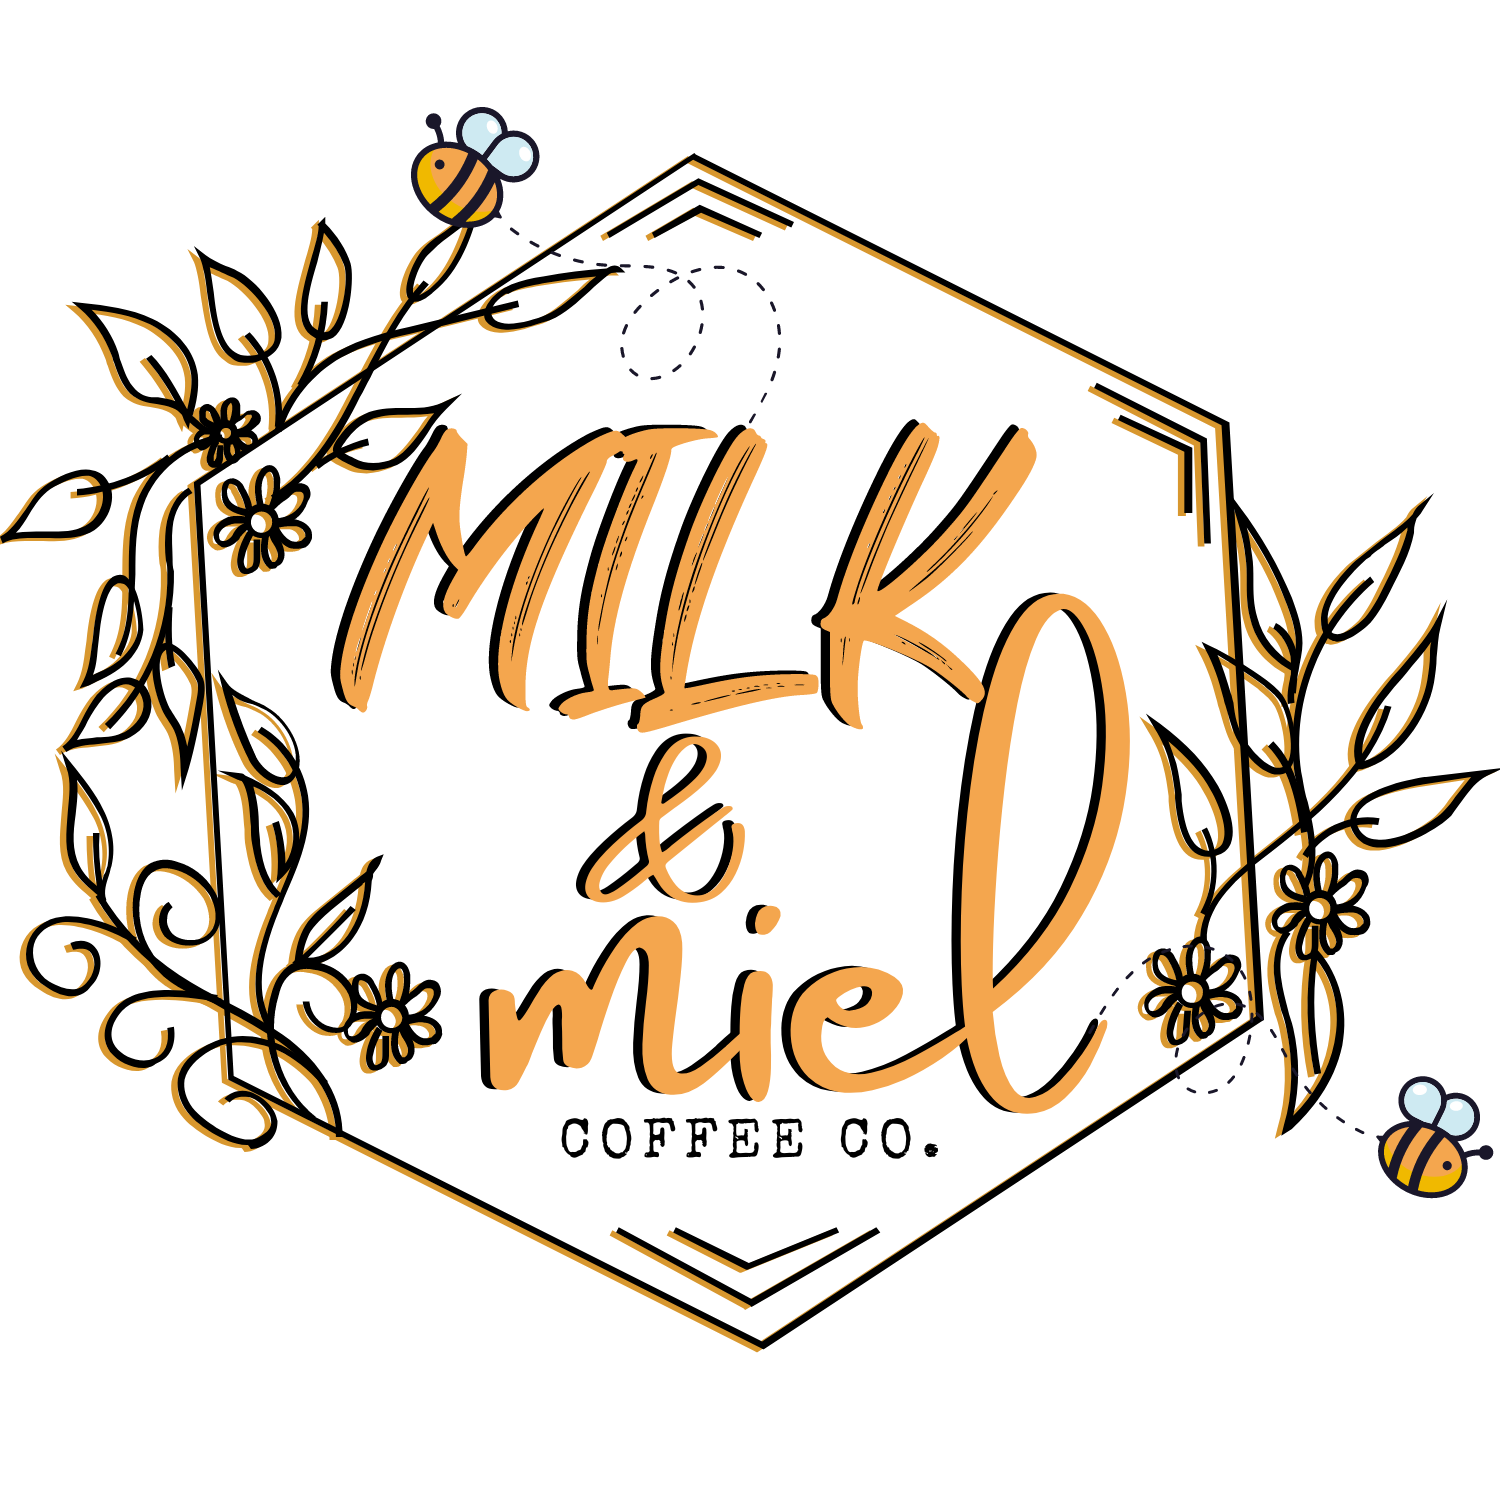 Milk and Miel